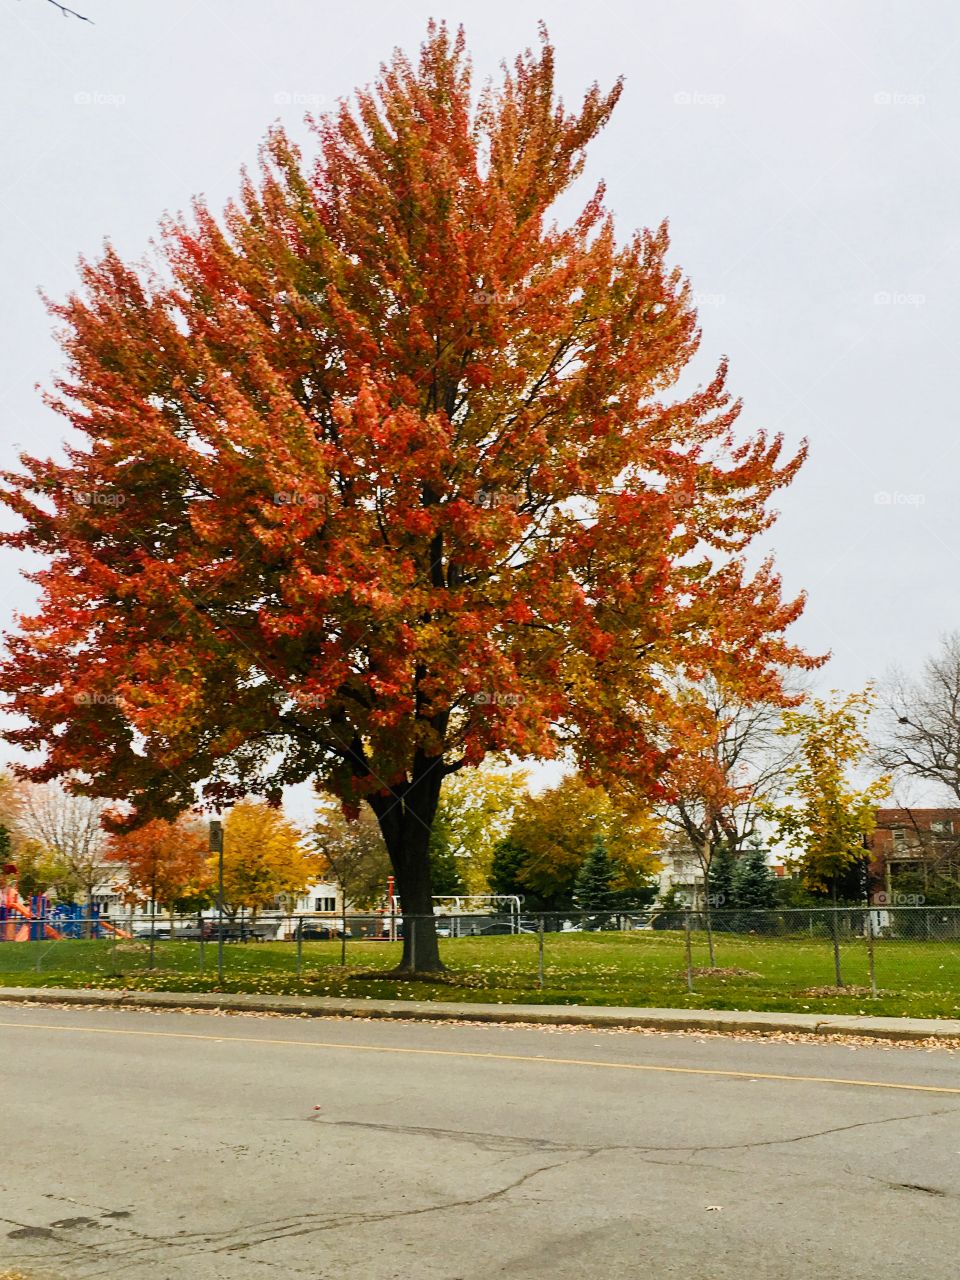 Autumn Tree01-Octobre 26 2016, Montreal, Quebec, Canada